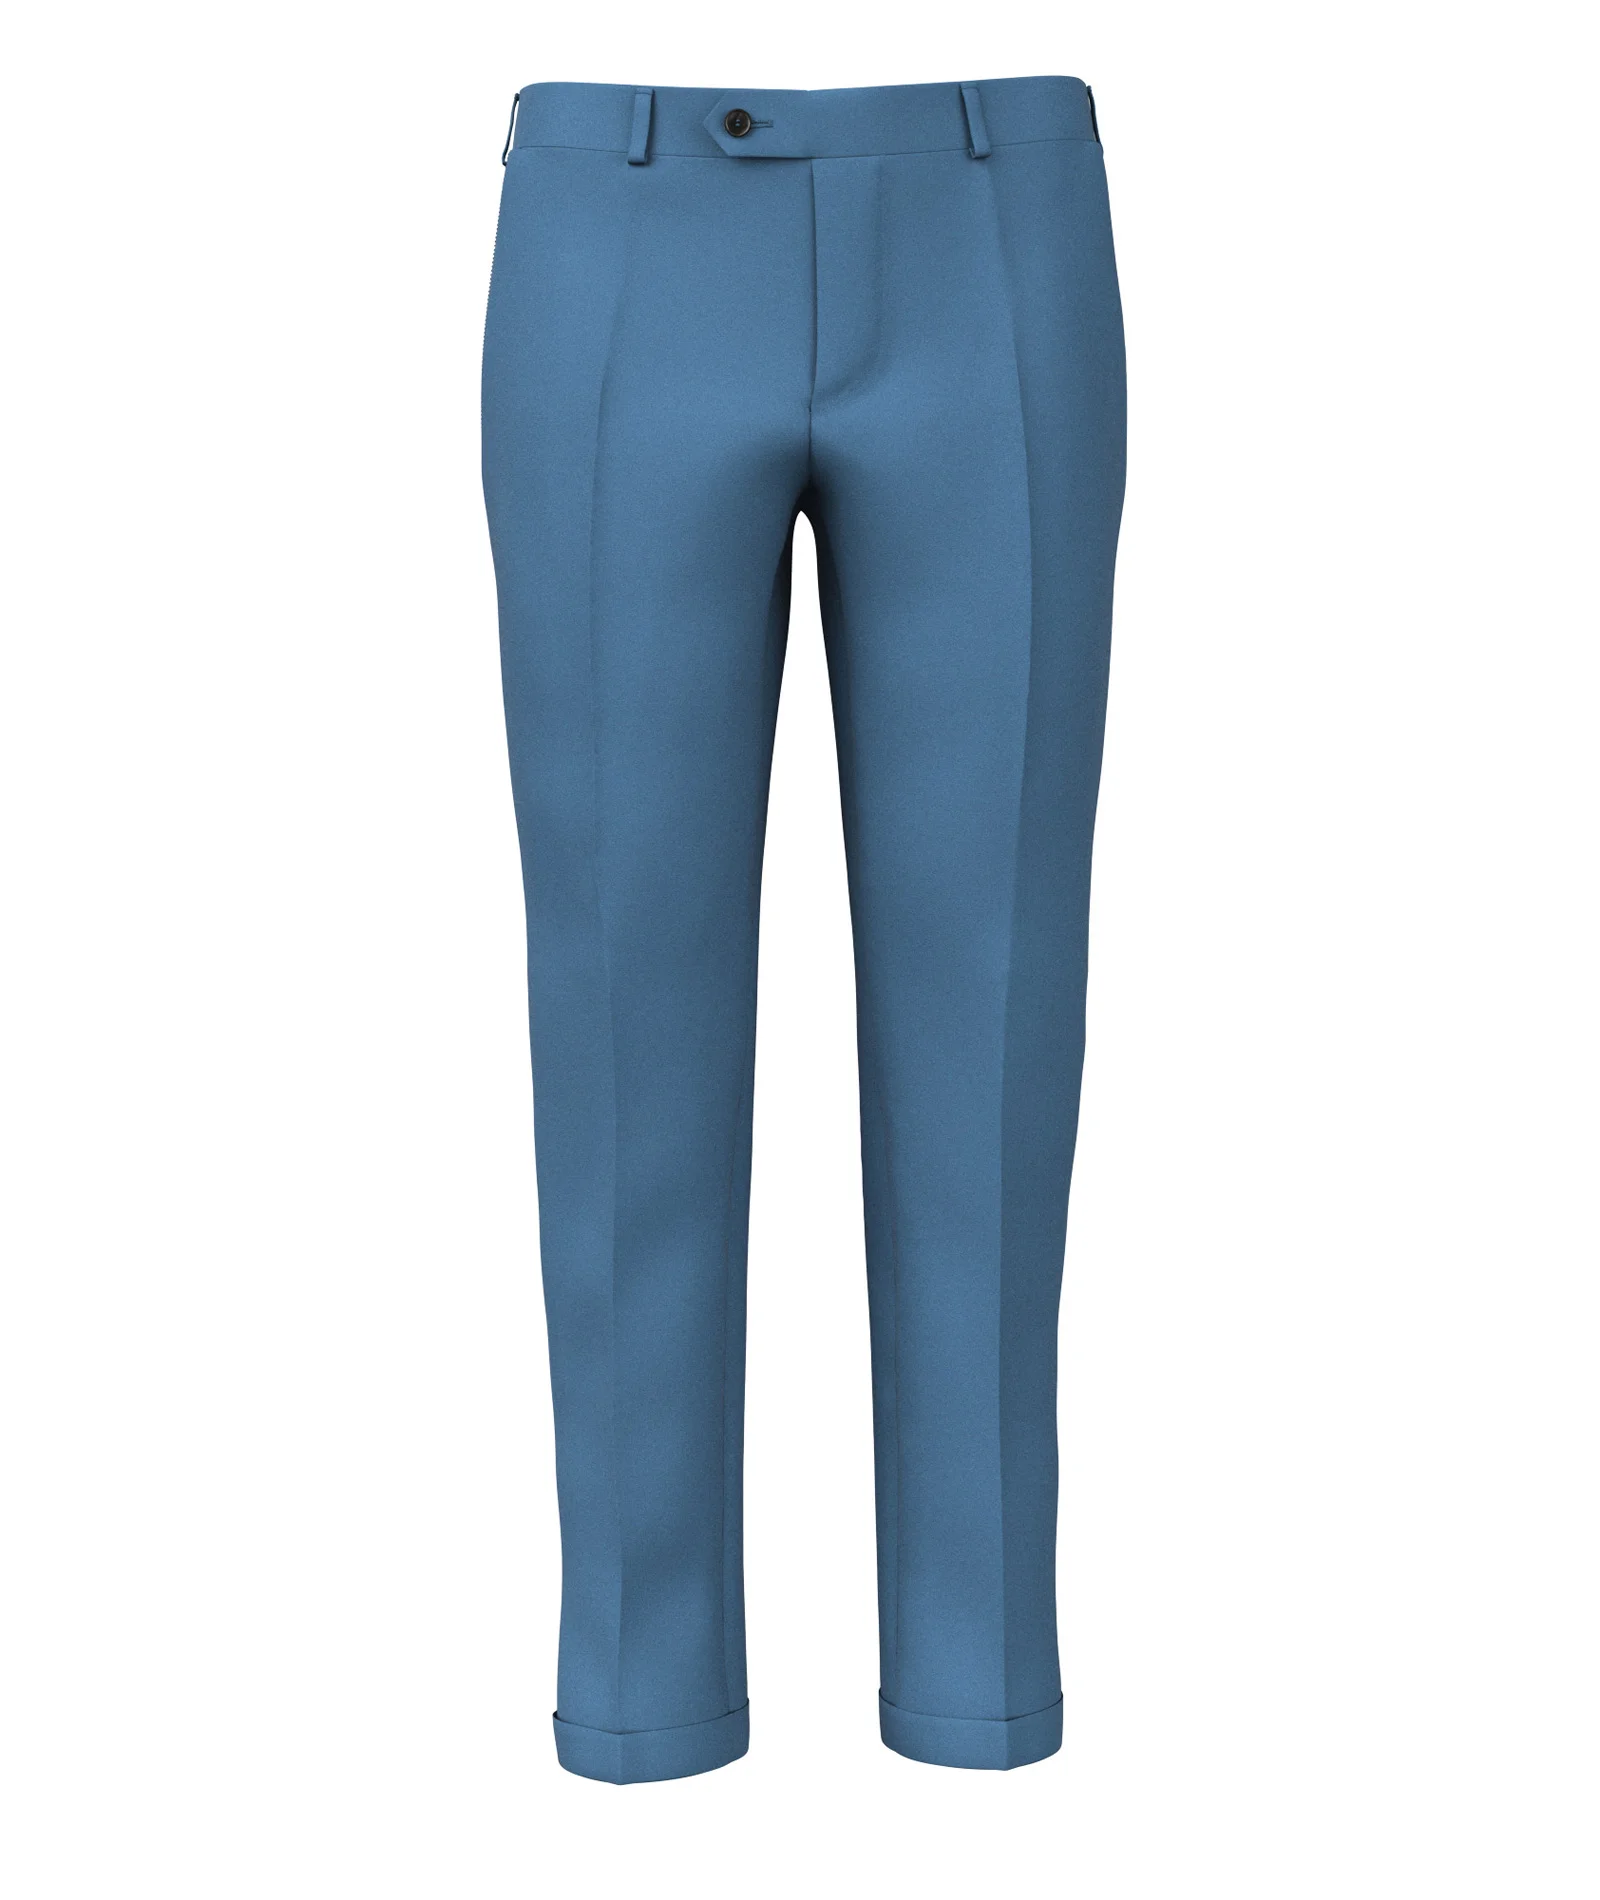 Lanieri Trousers MTM Review: Custom High Quality Trousers